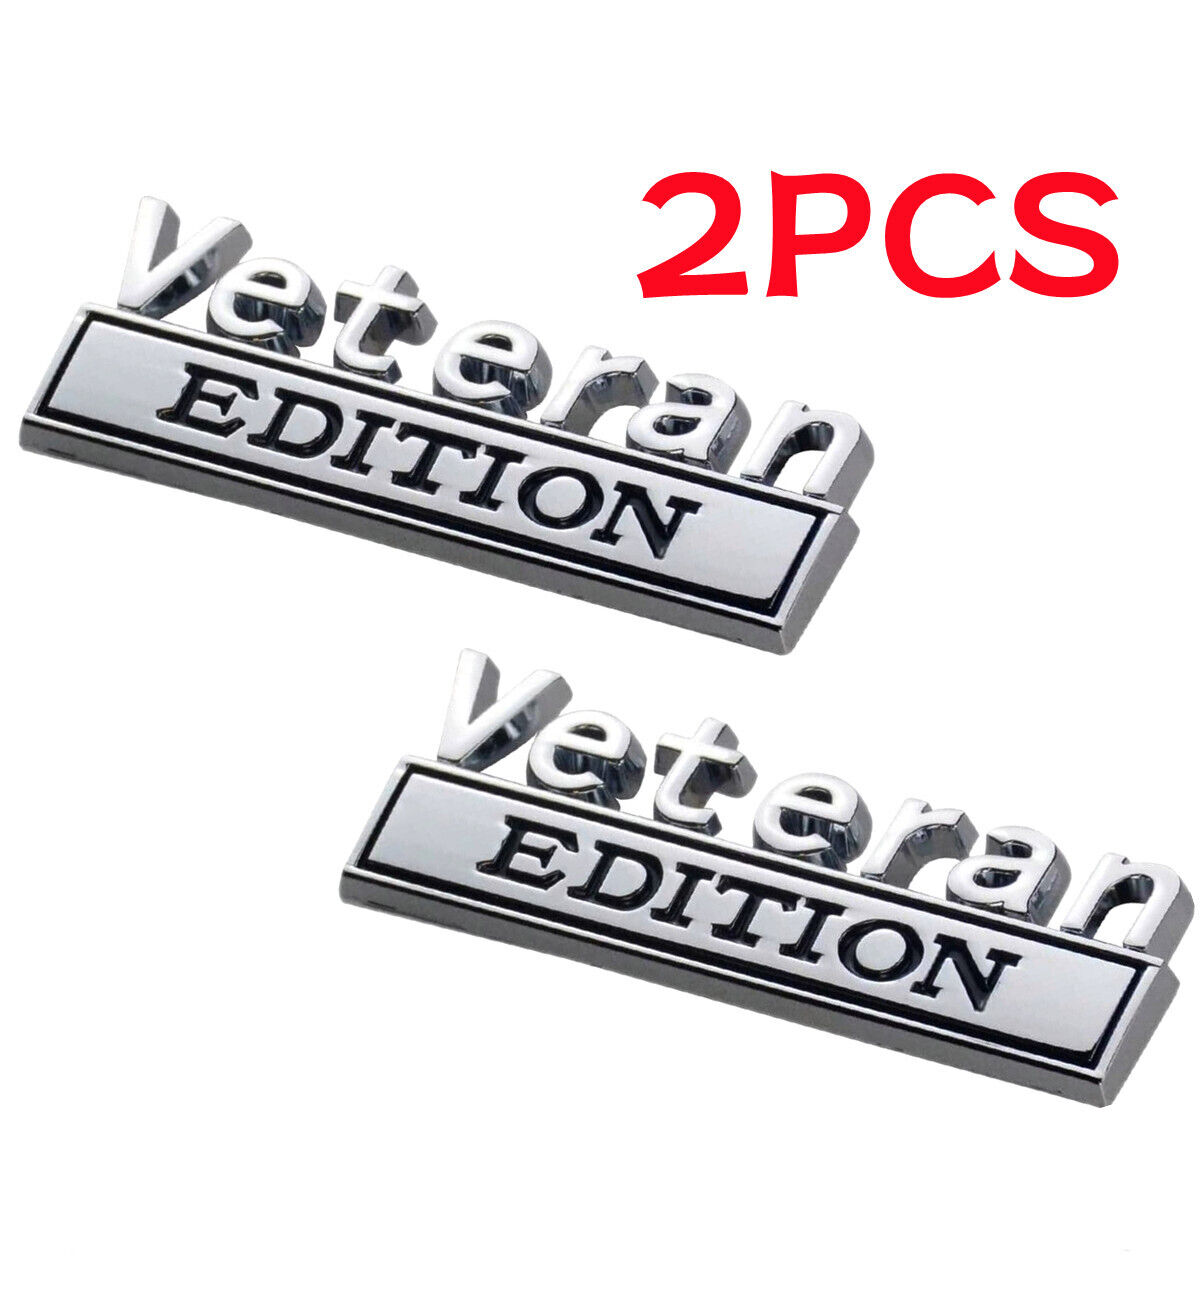 2pcs Veteran Edition Emblem Badge Car Truck Rear Tailgate Sticker Decal Alloy US